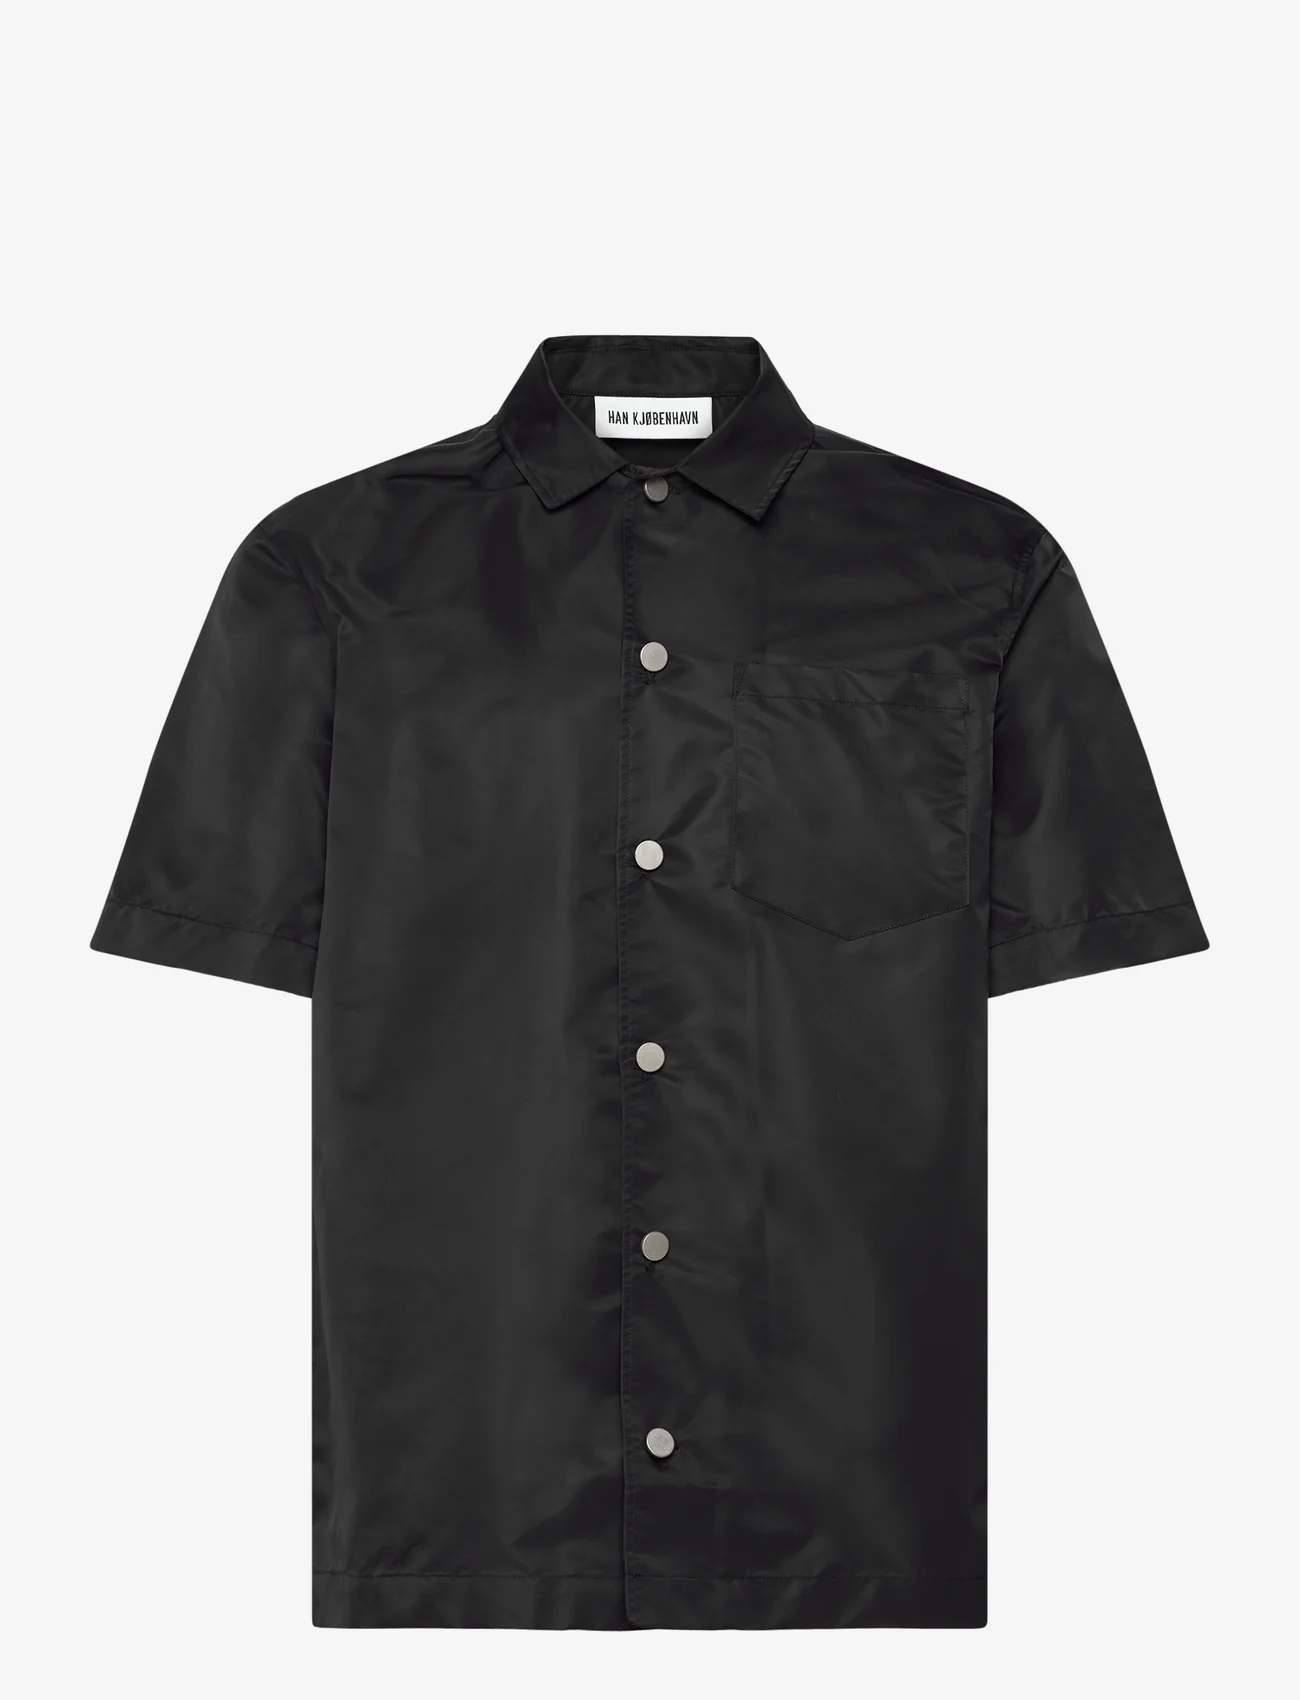 HAN Kjøbenhavn - Recycled Nylon Summer Shirt - marškinėliai trumpomis rankovėmis - black - 0